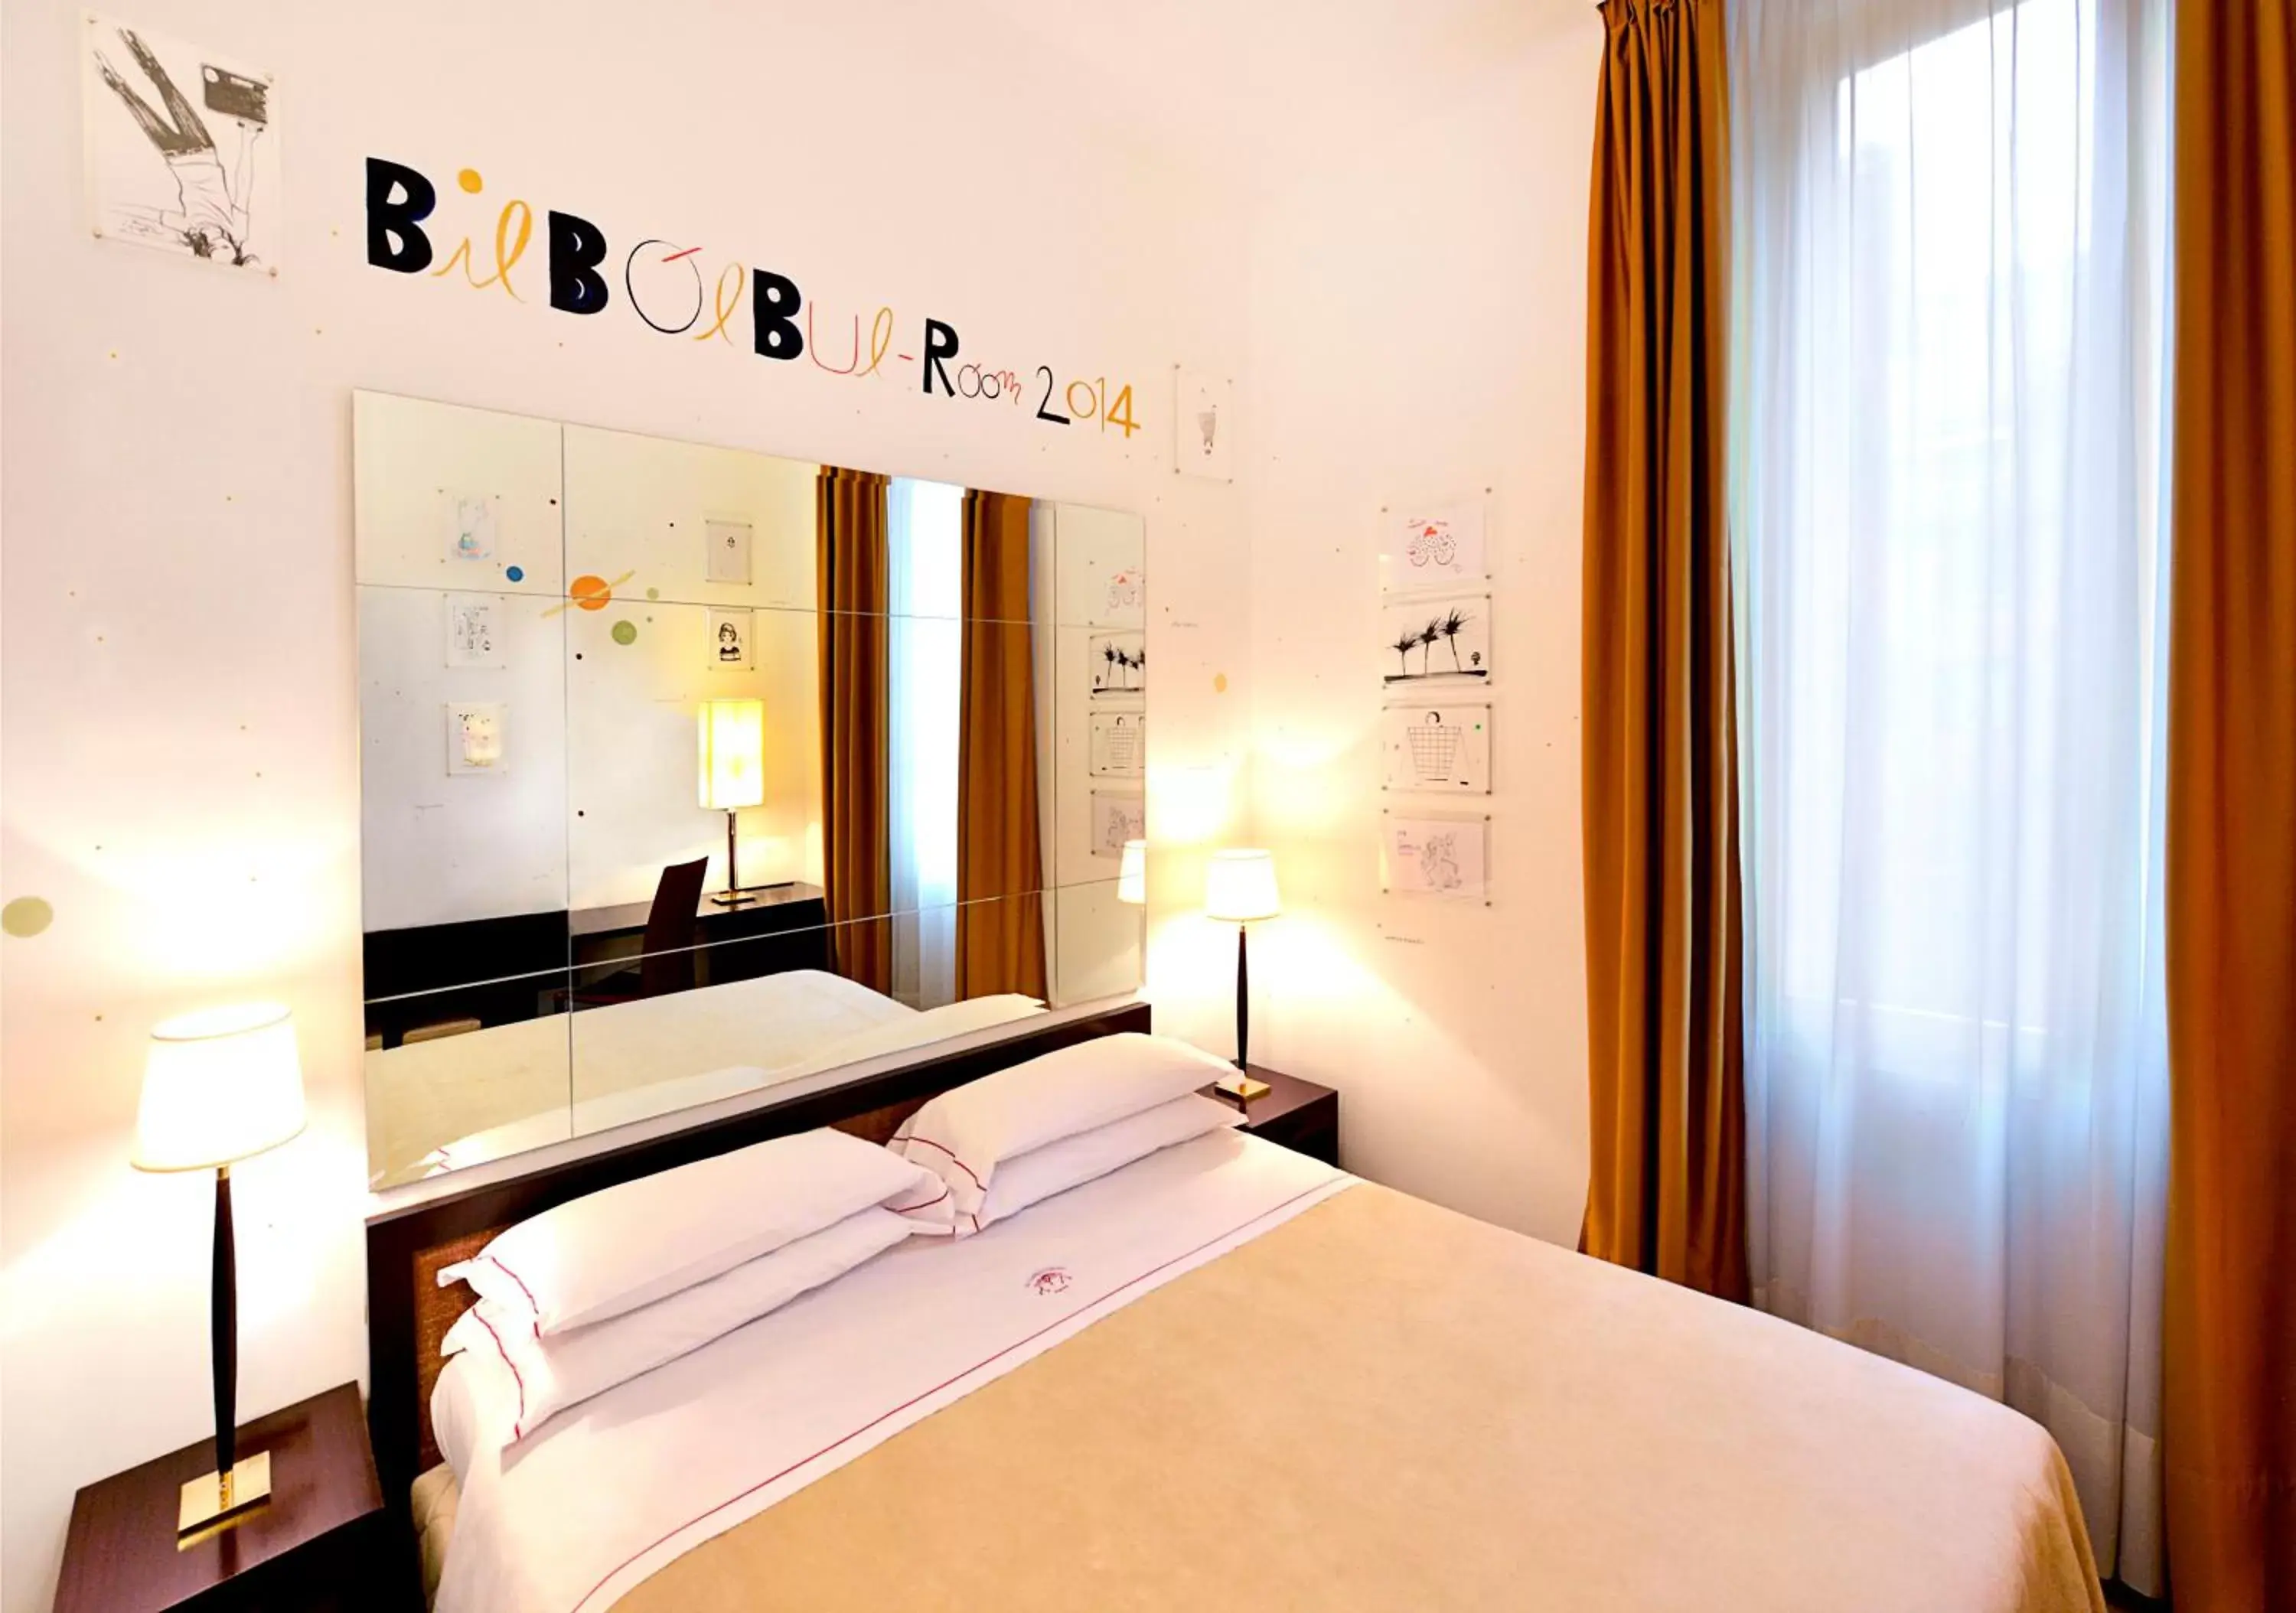 Photo of the whole room, Bed in PHI HOTEL BOLOGNA "Al Cappello Rosso"